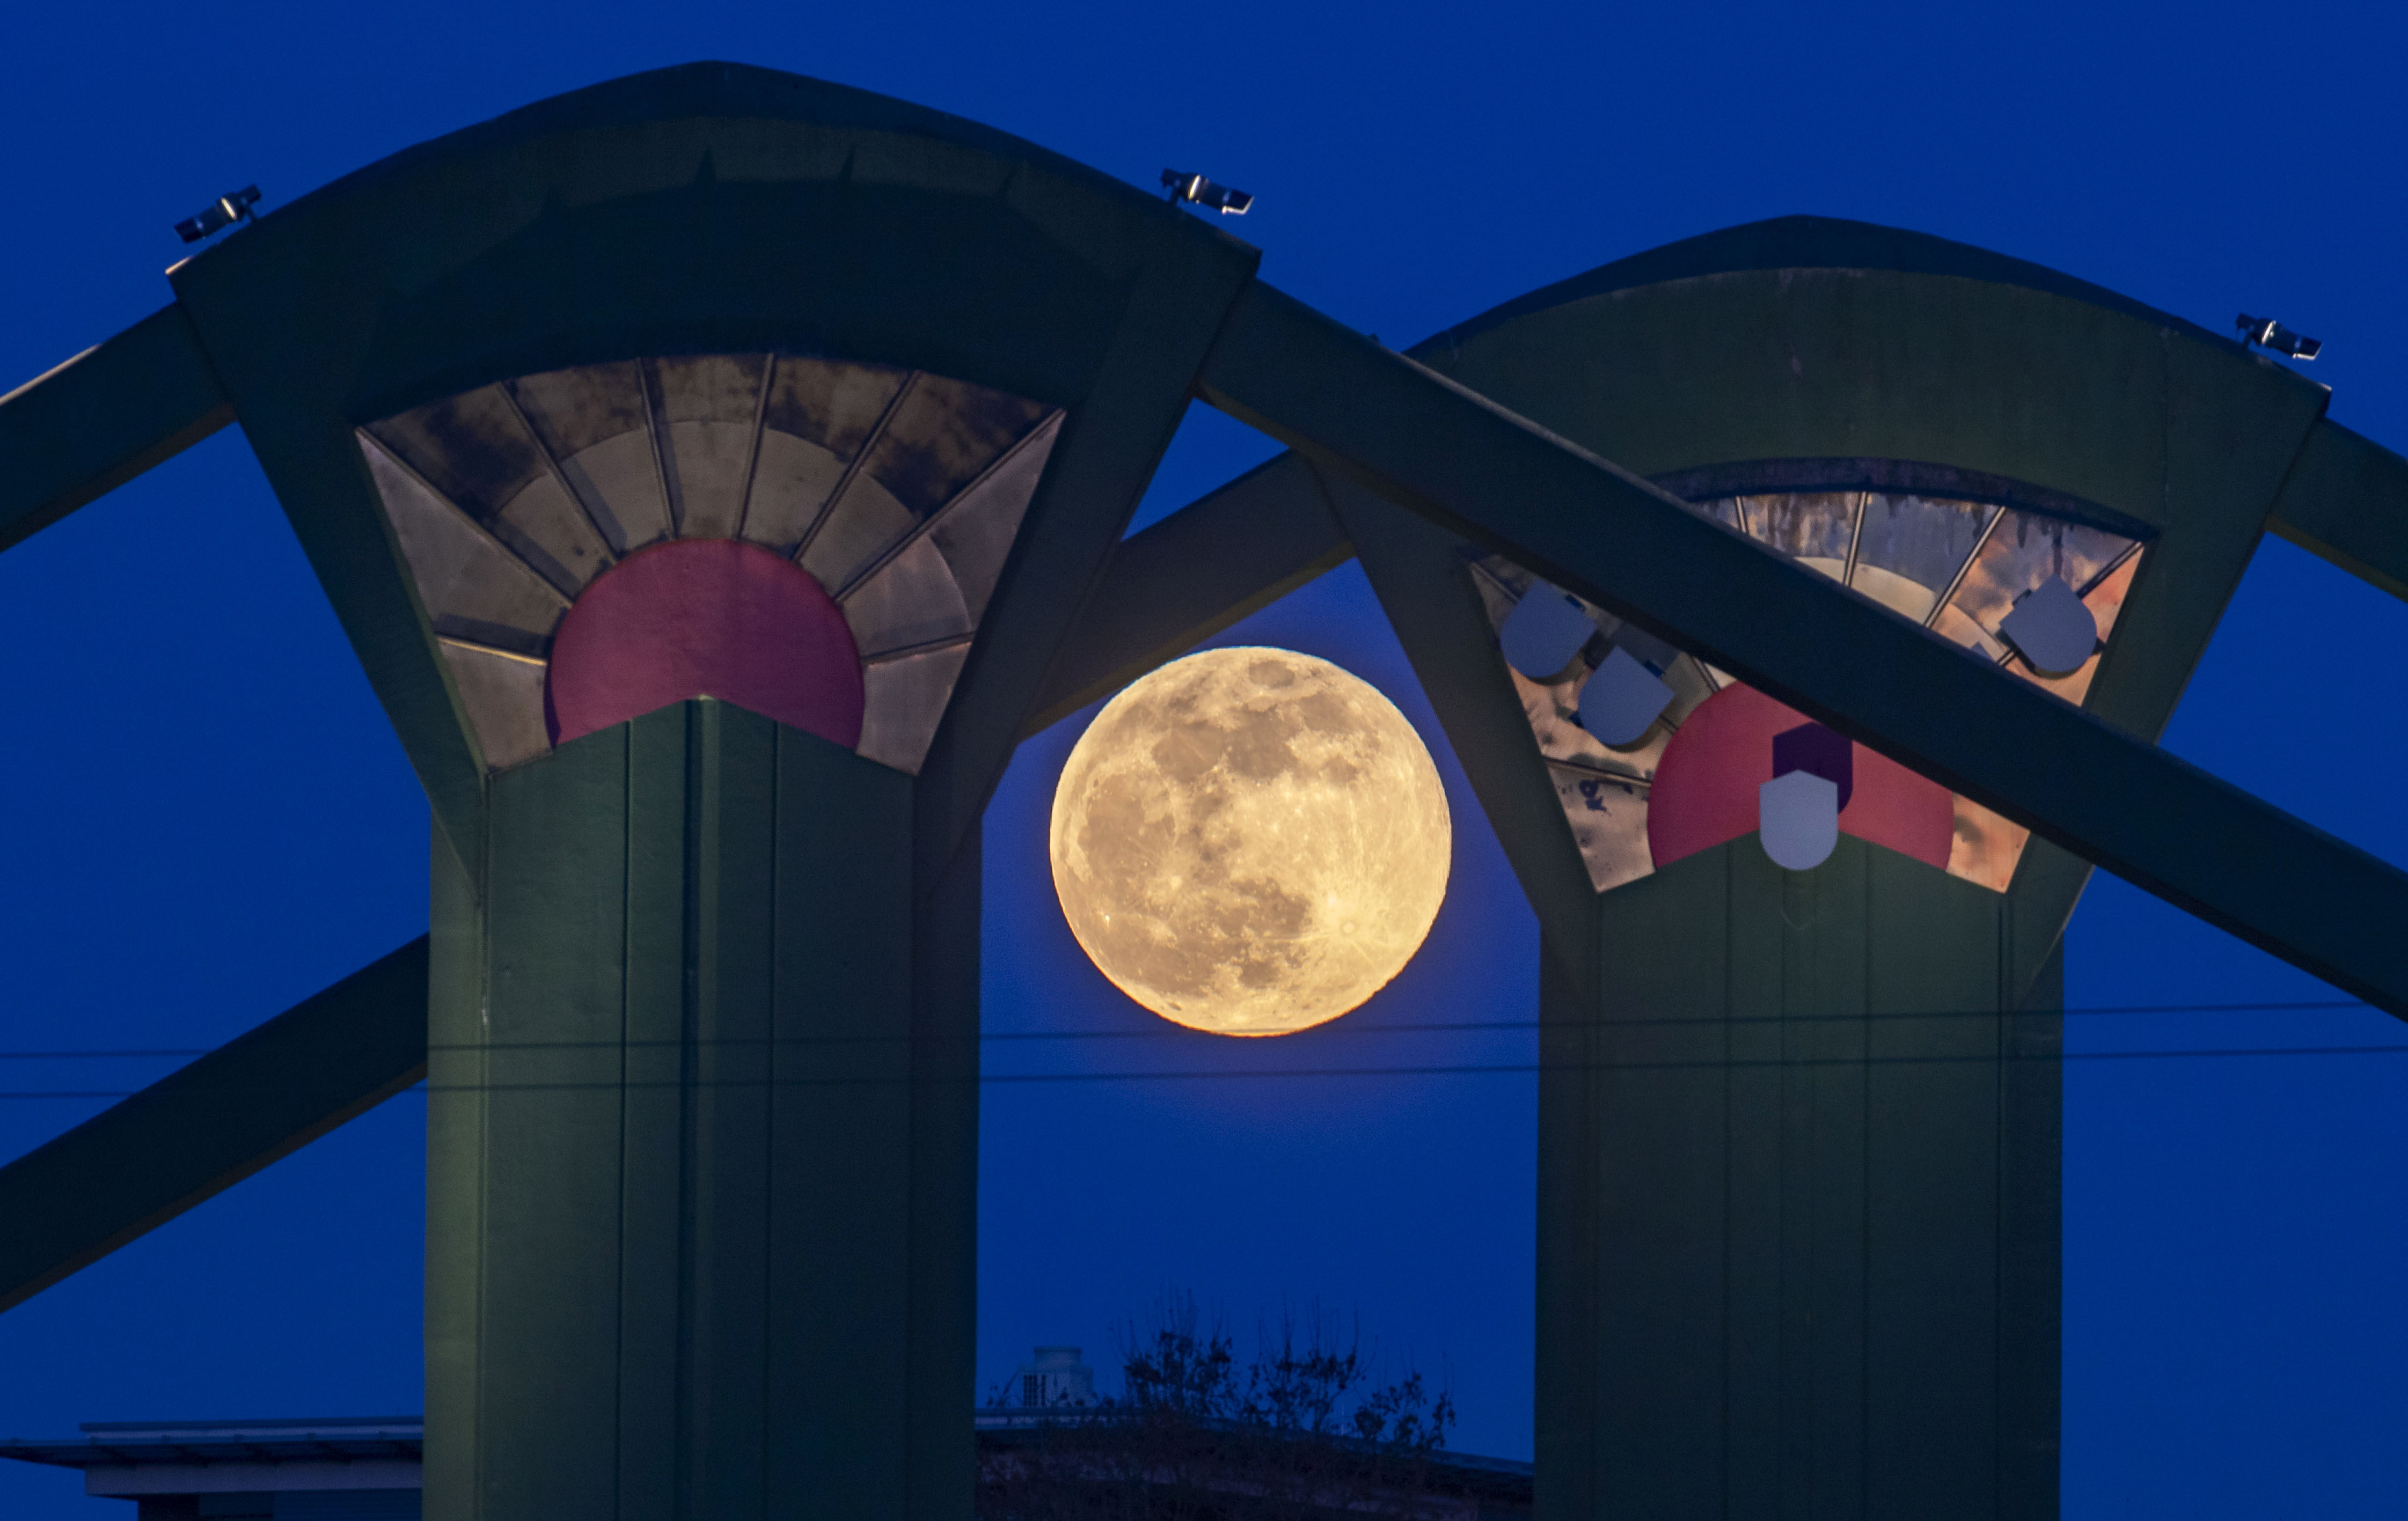 The moon is framed between illuminated concrete columns of the Floesser Bridge in Frankfurt